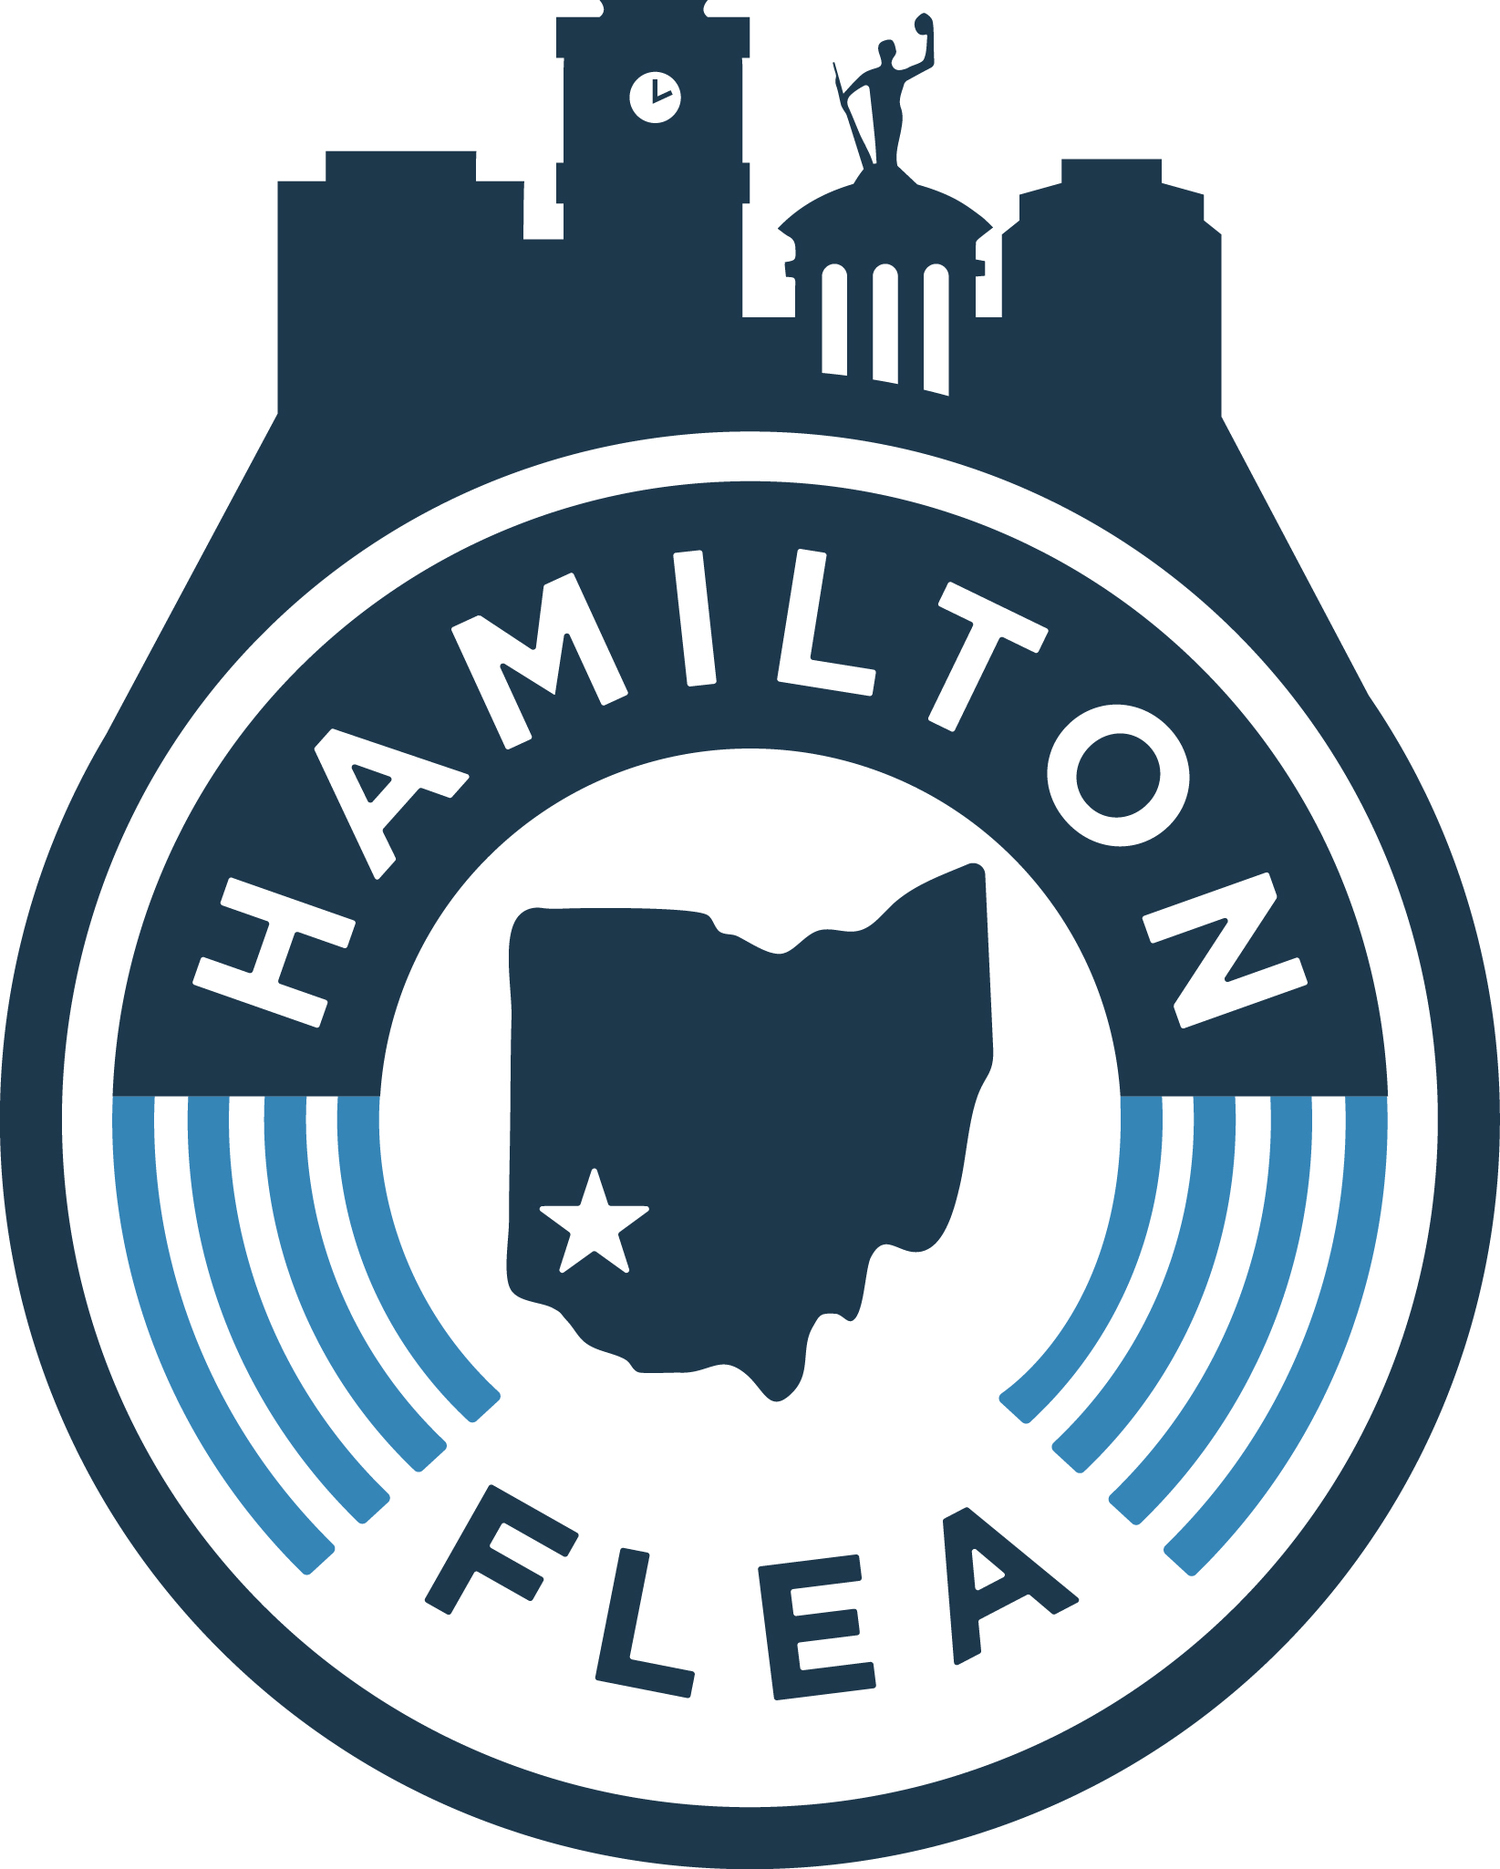 2018 Hamilton Spring Flea Market